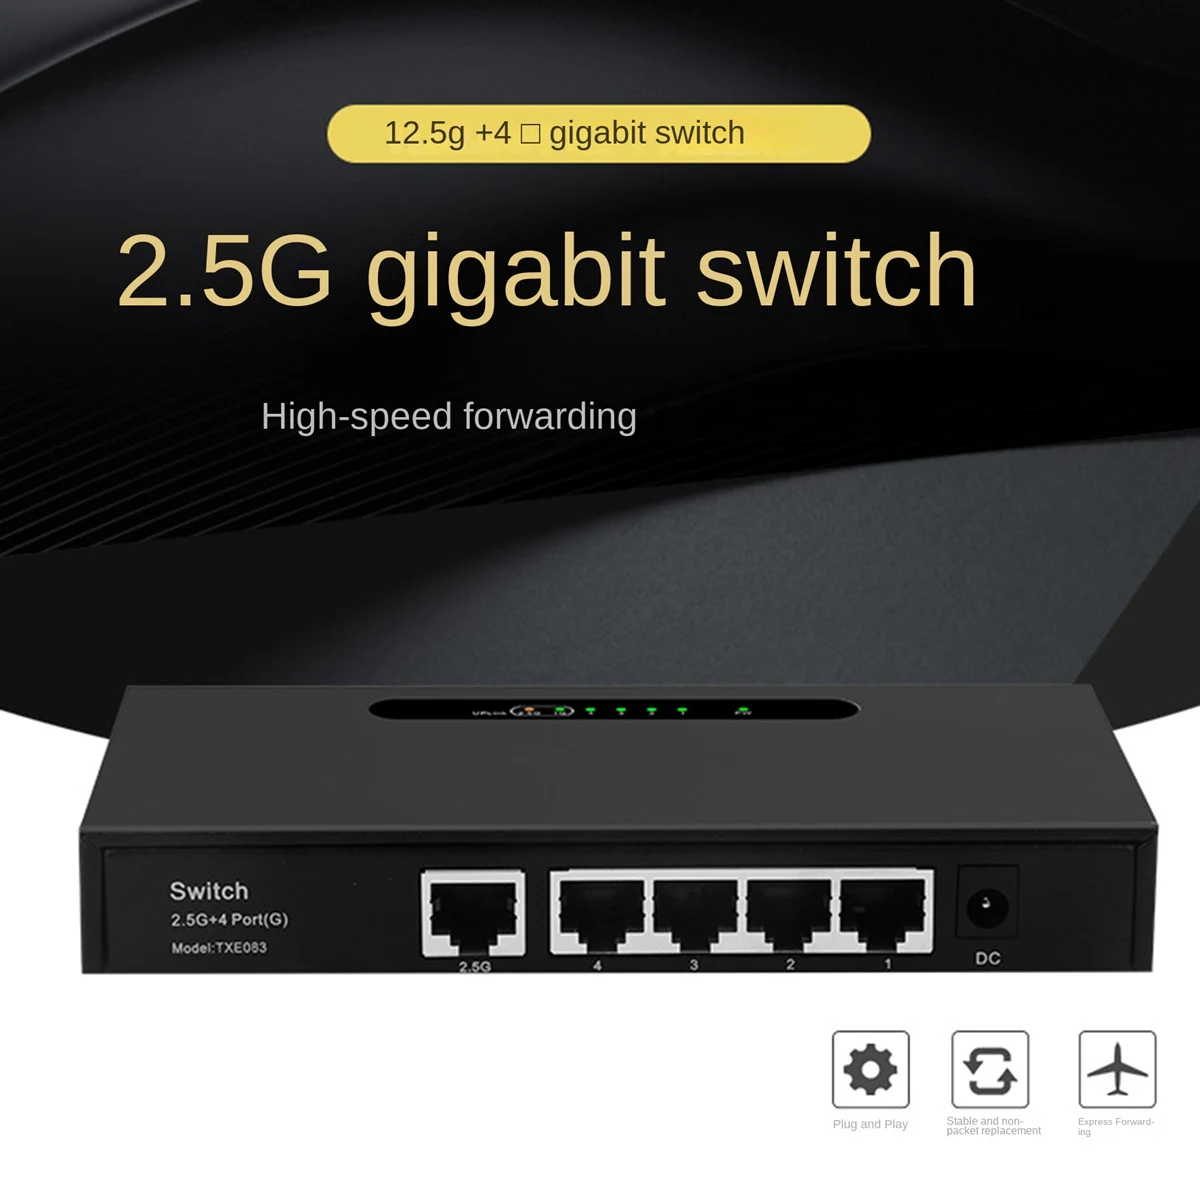 TXE083 Gigabit switch 2,5 G, 4-портов Ethernet switch, Unmanaged switch, Штепсельная вилица ЕС . ' - ' . 0